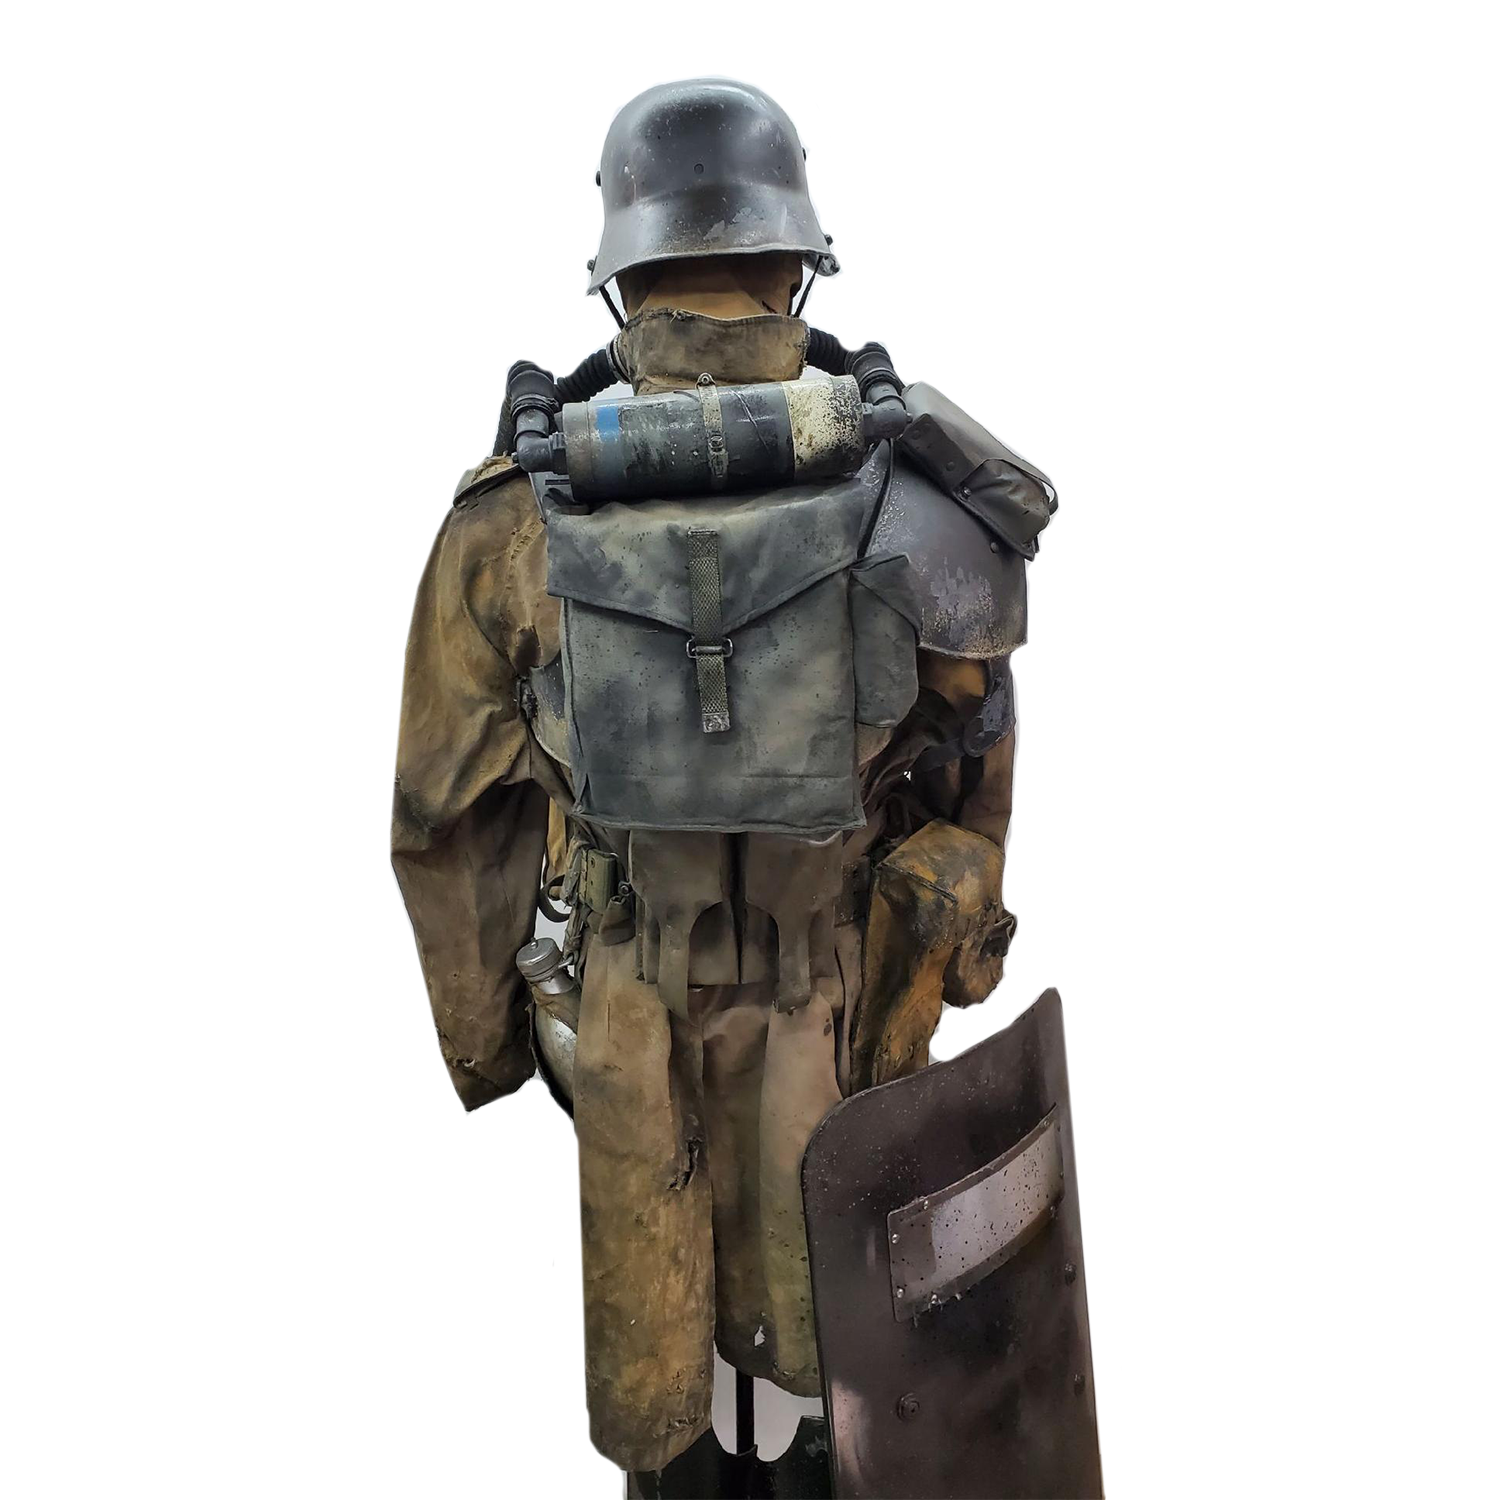 Deluxe World War V Soldier Adult Costume